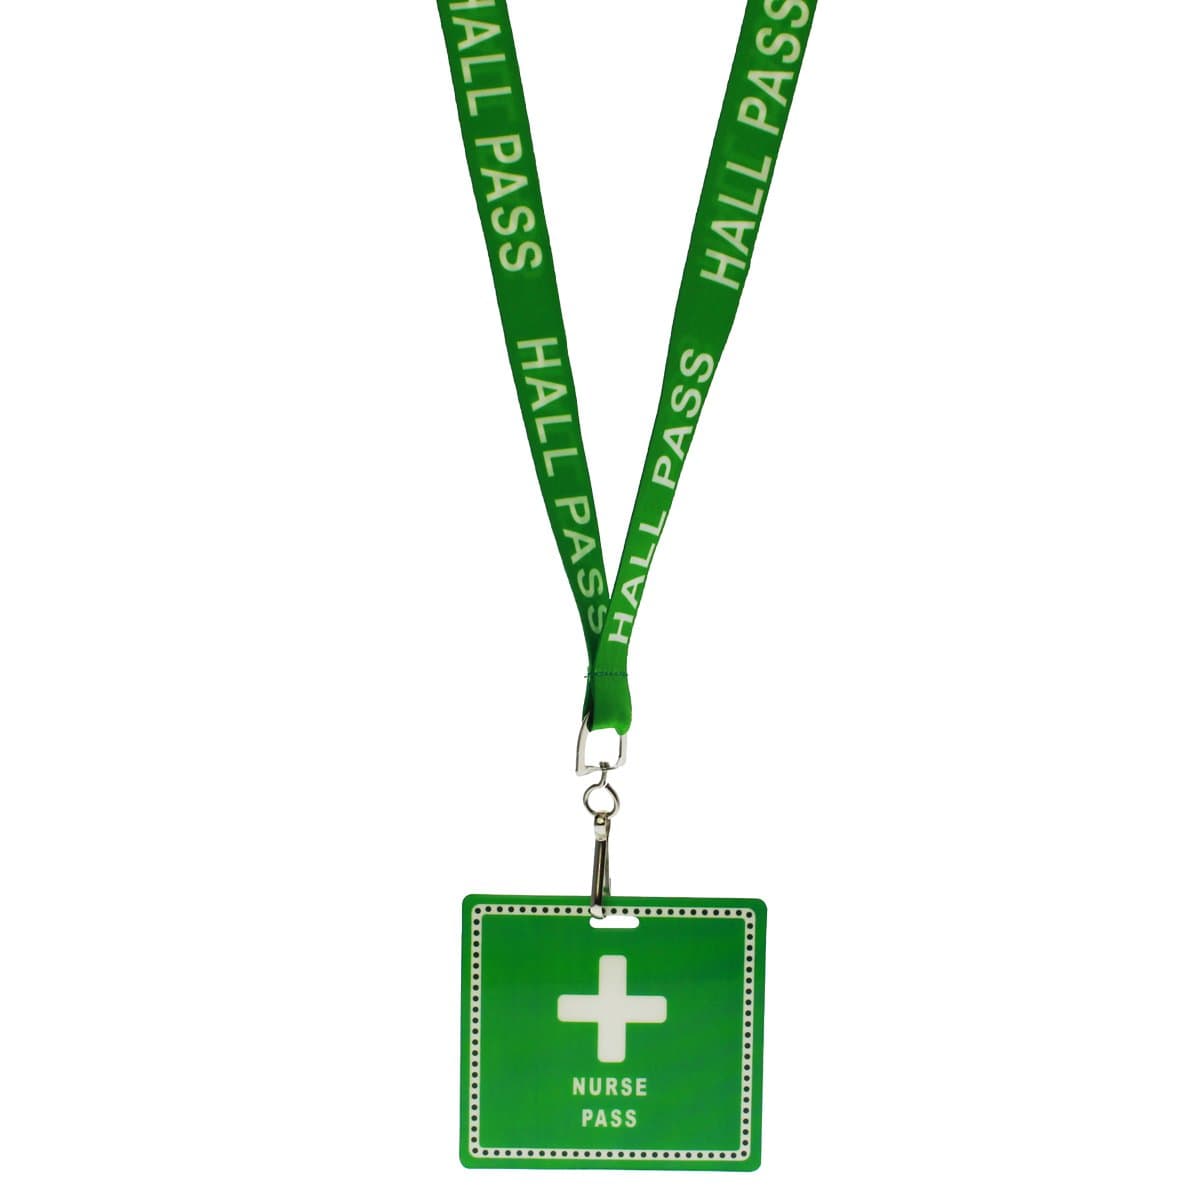 green hall pass breakaway lanyard clipped to green nurse  pass card